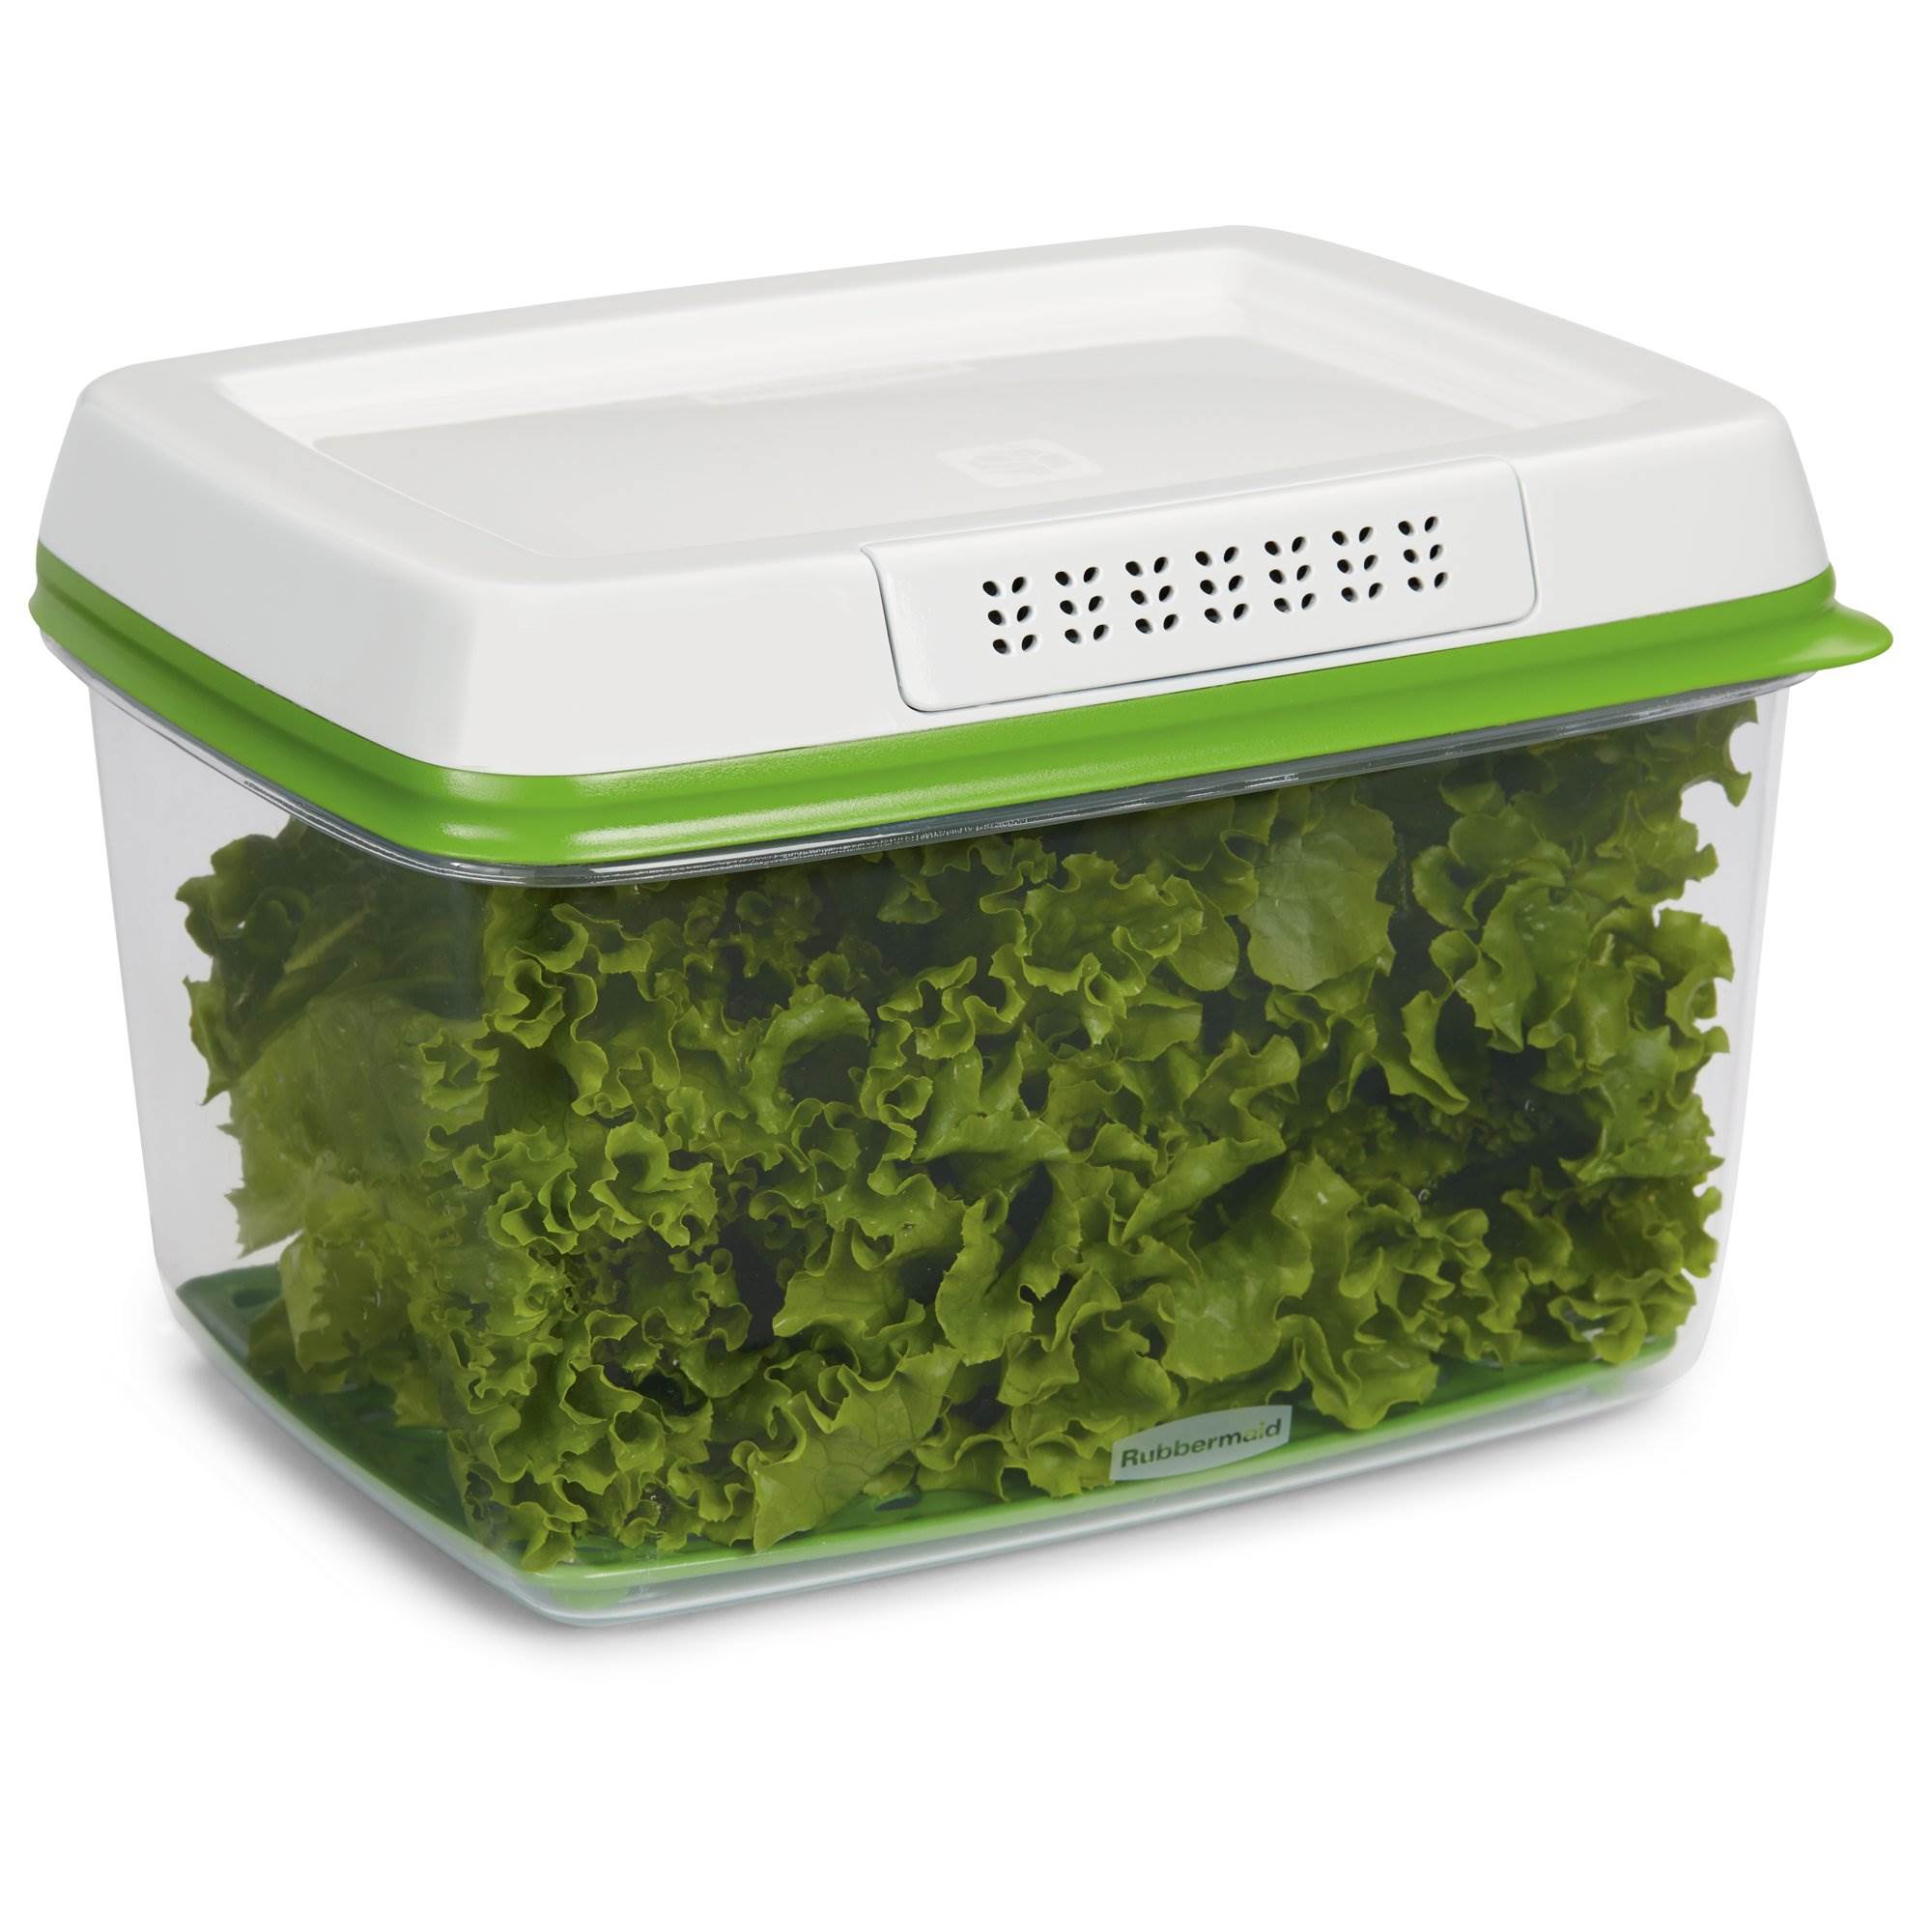 Rubbermaid FreshWorks Produce Saver Fresh Vegetable Storage Container, Large - image 3 of 5